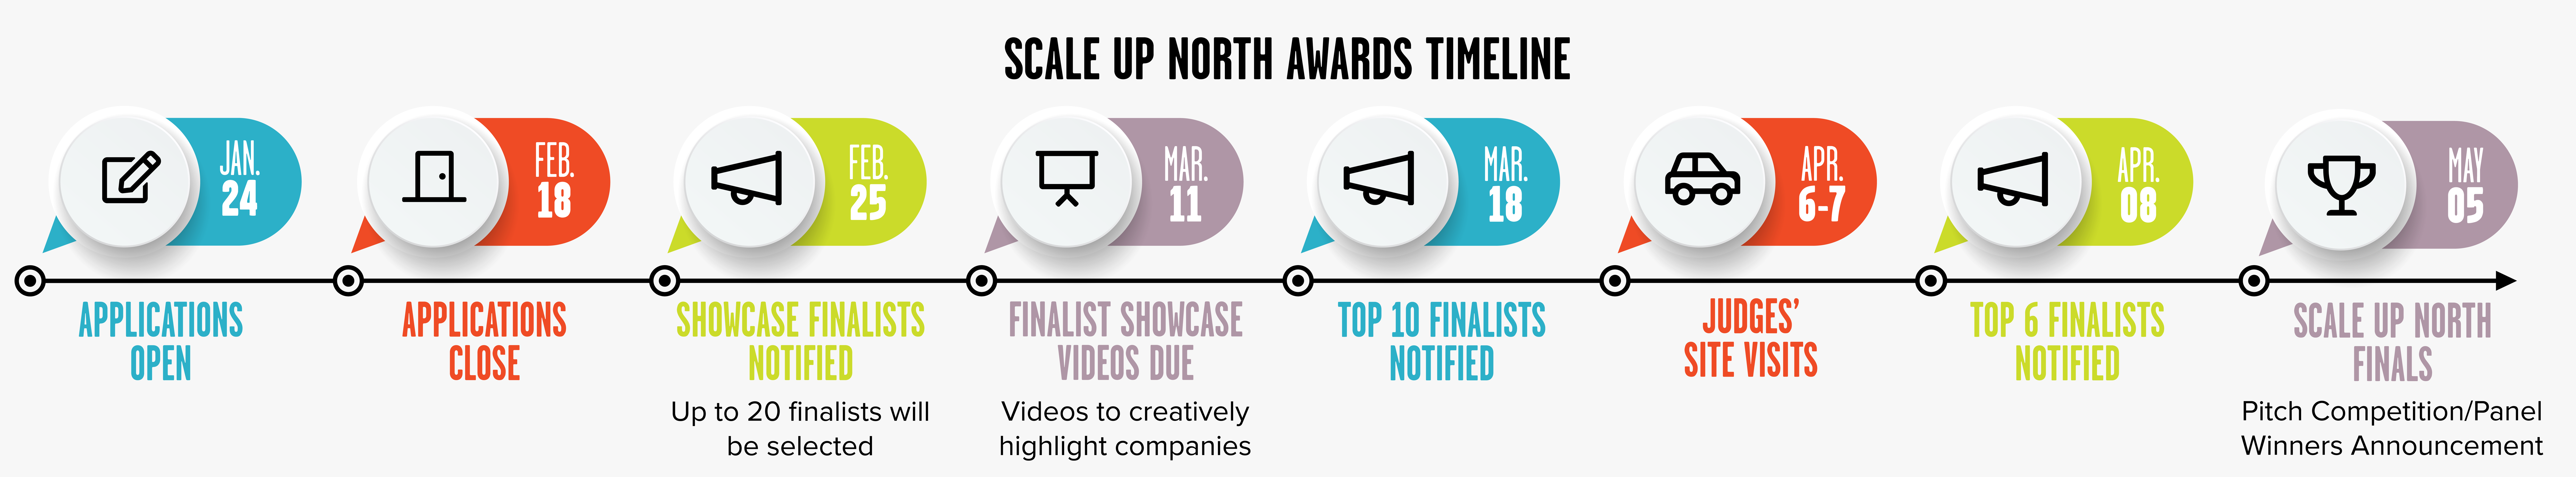 Scale Up North Awards Timeline